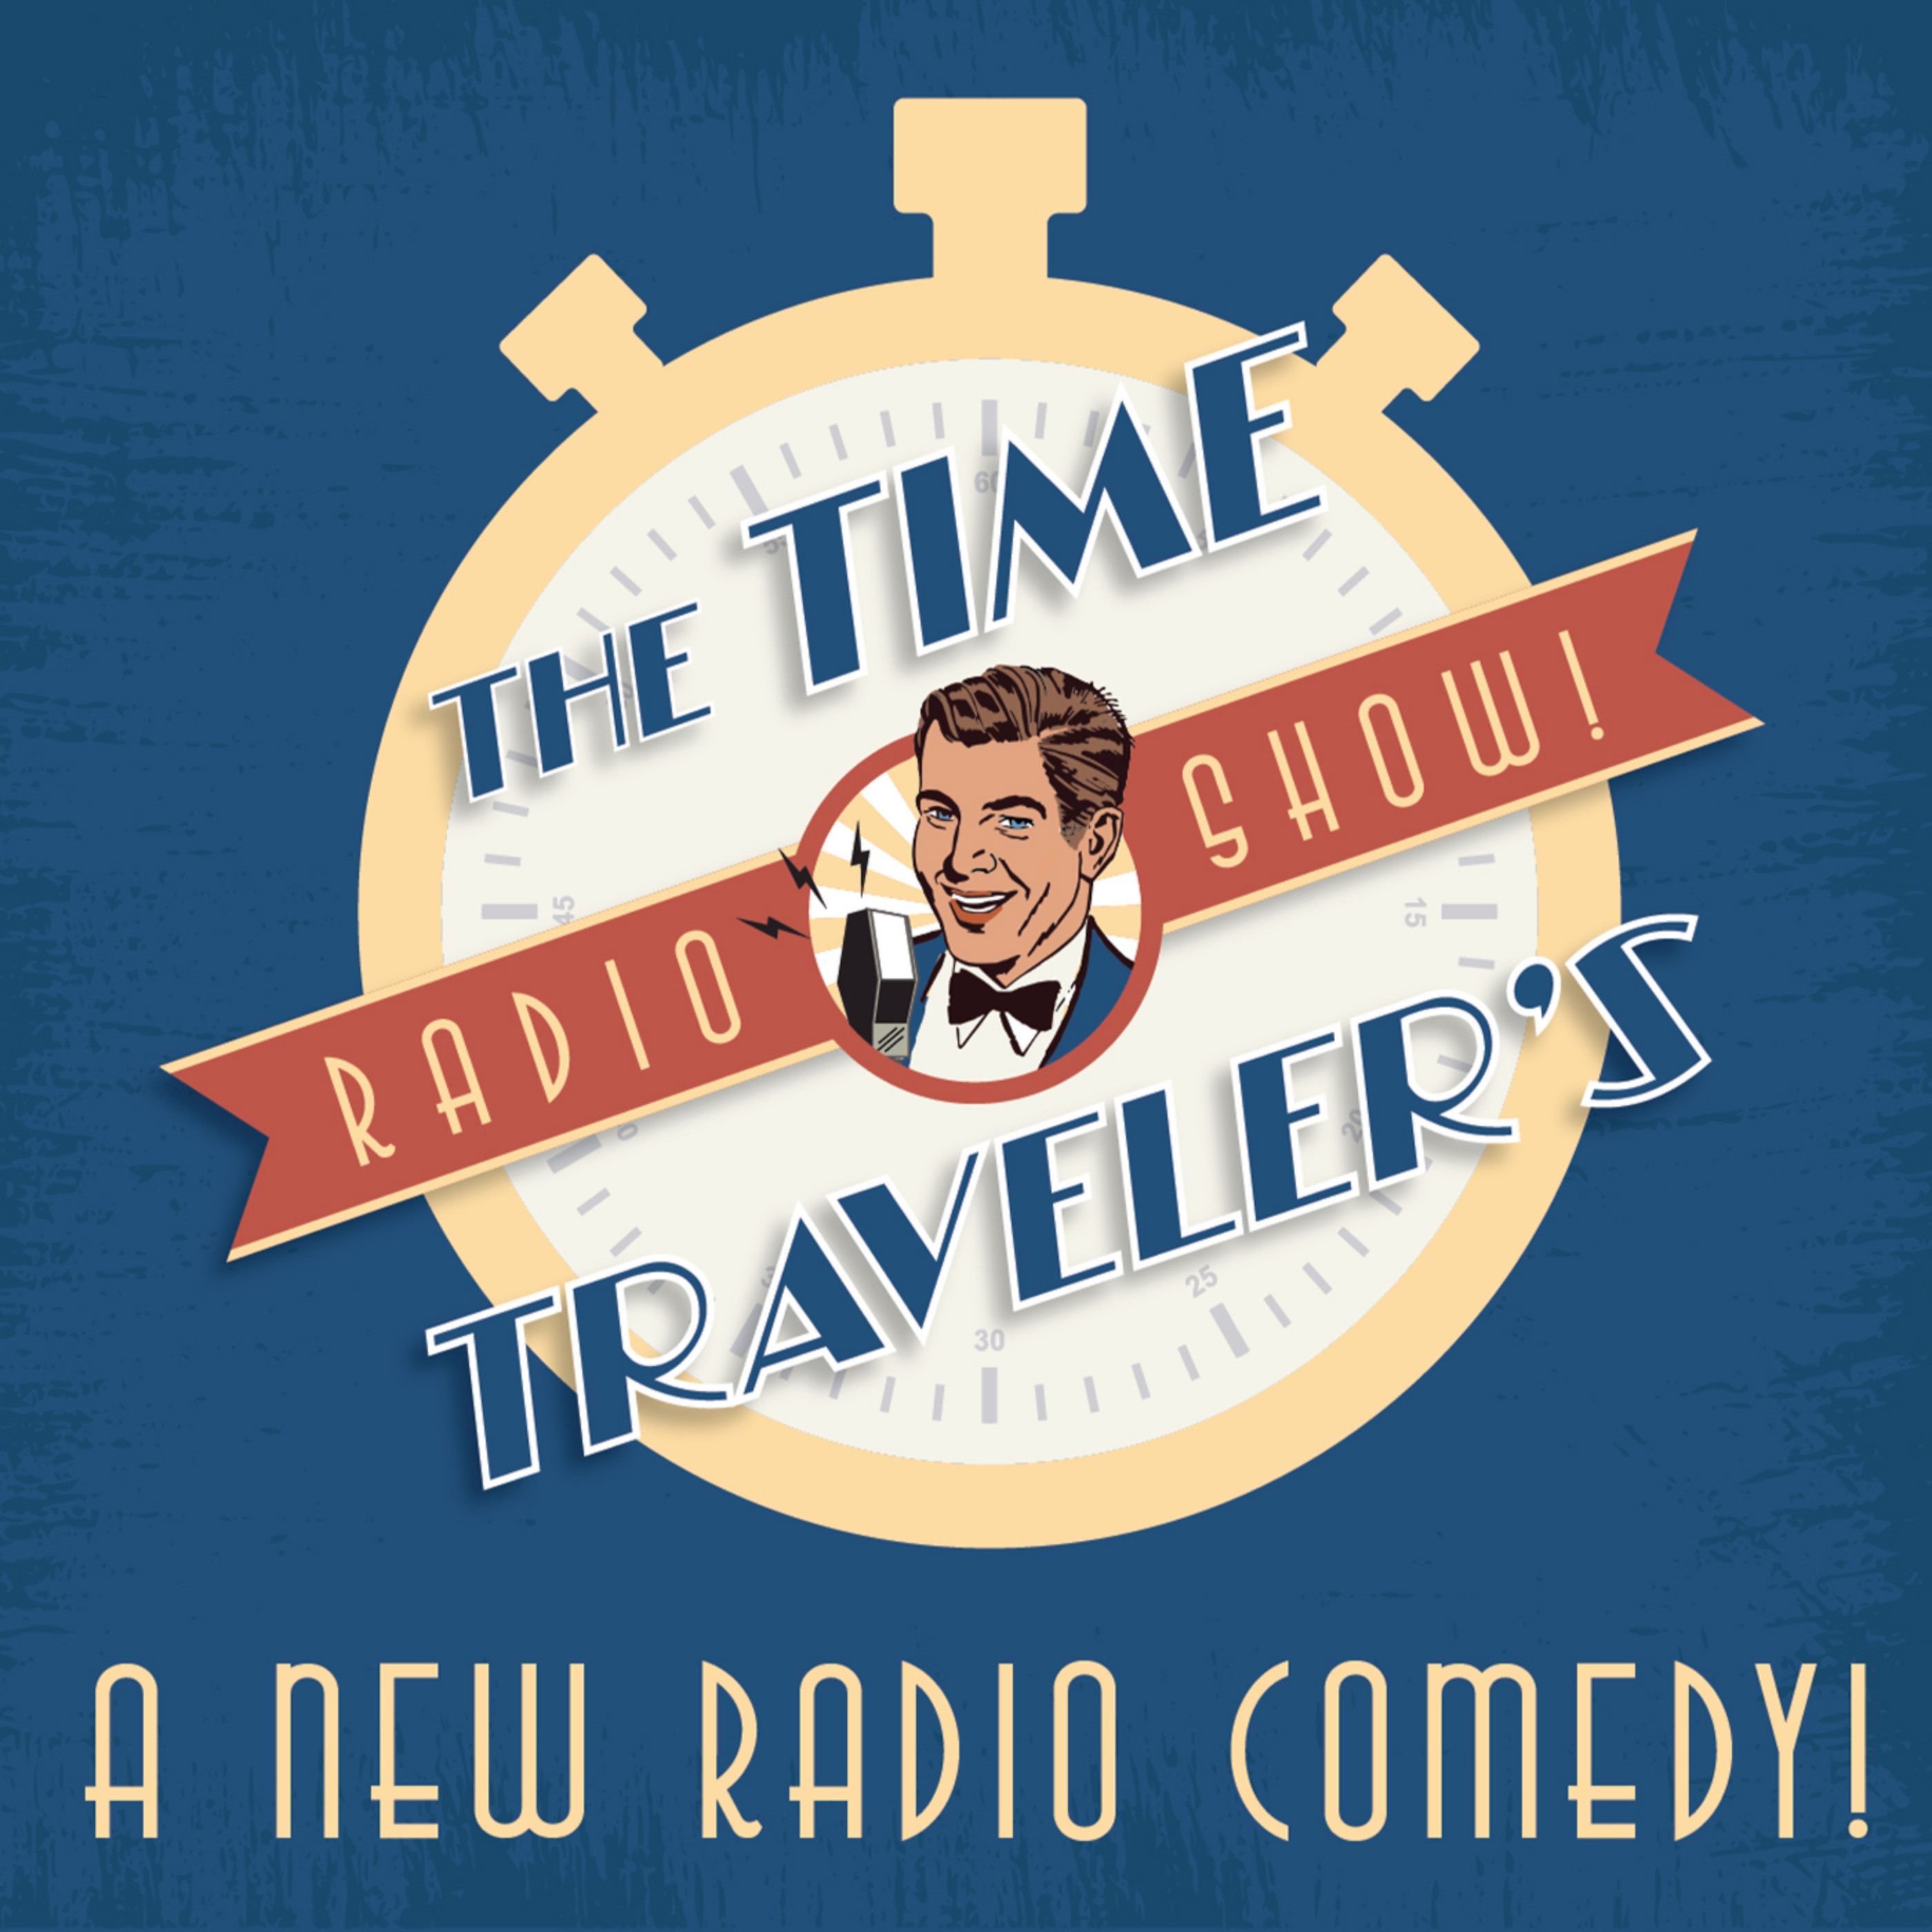 The Time Traveler’s Radio Show!